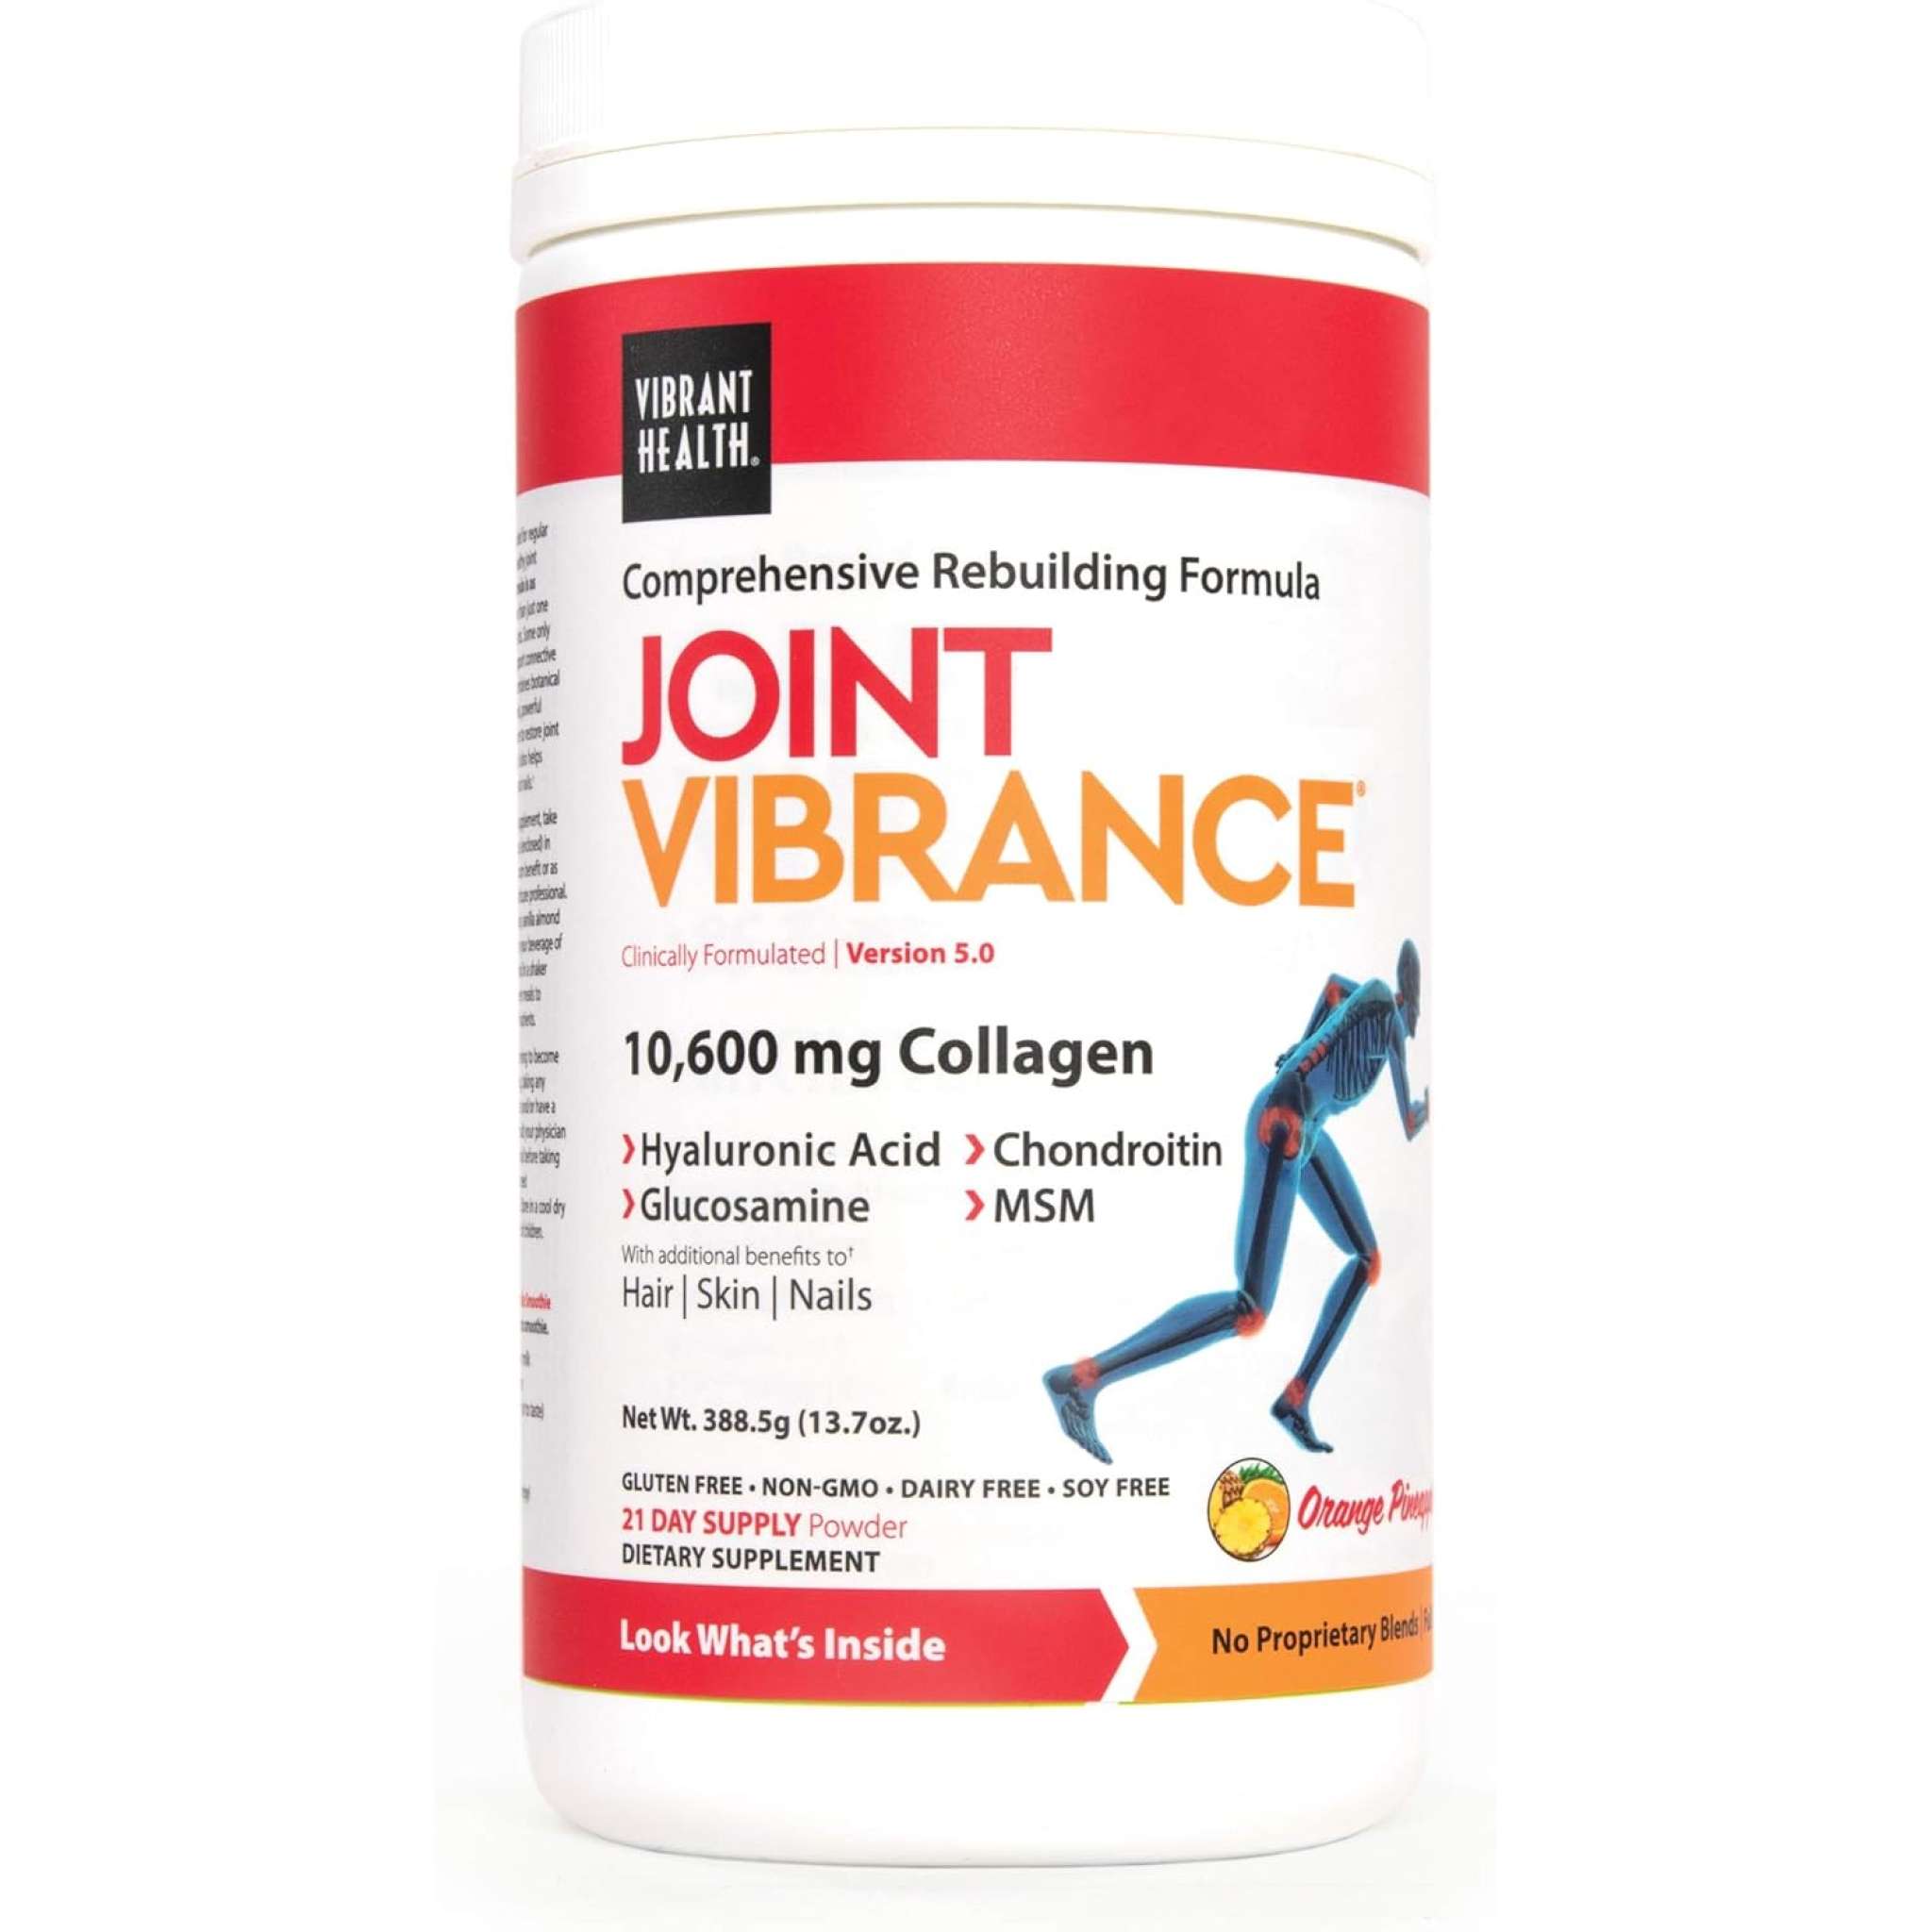 Vibrant Health - Joint Vibrance